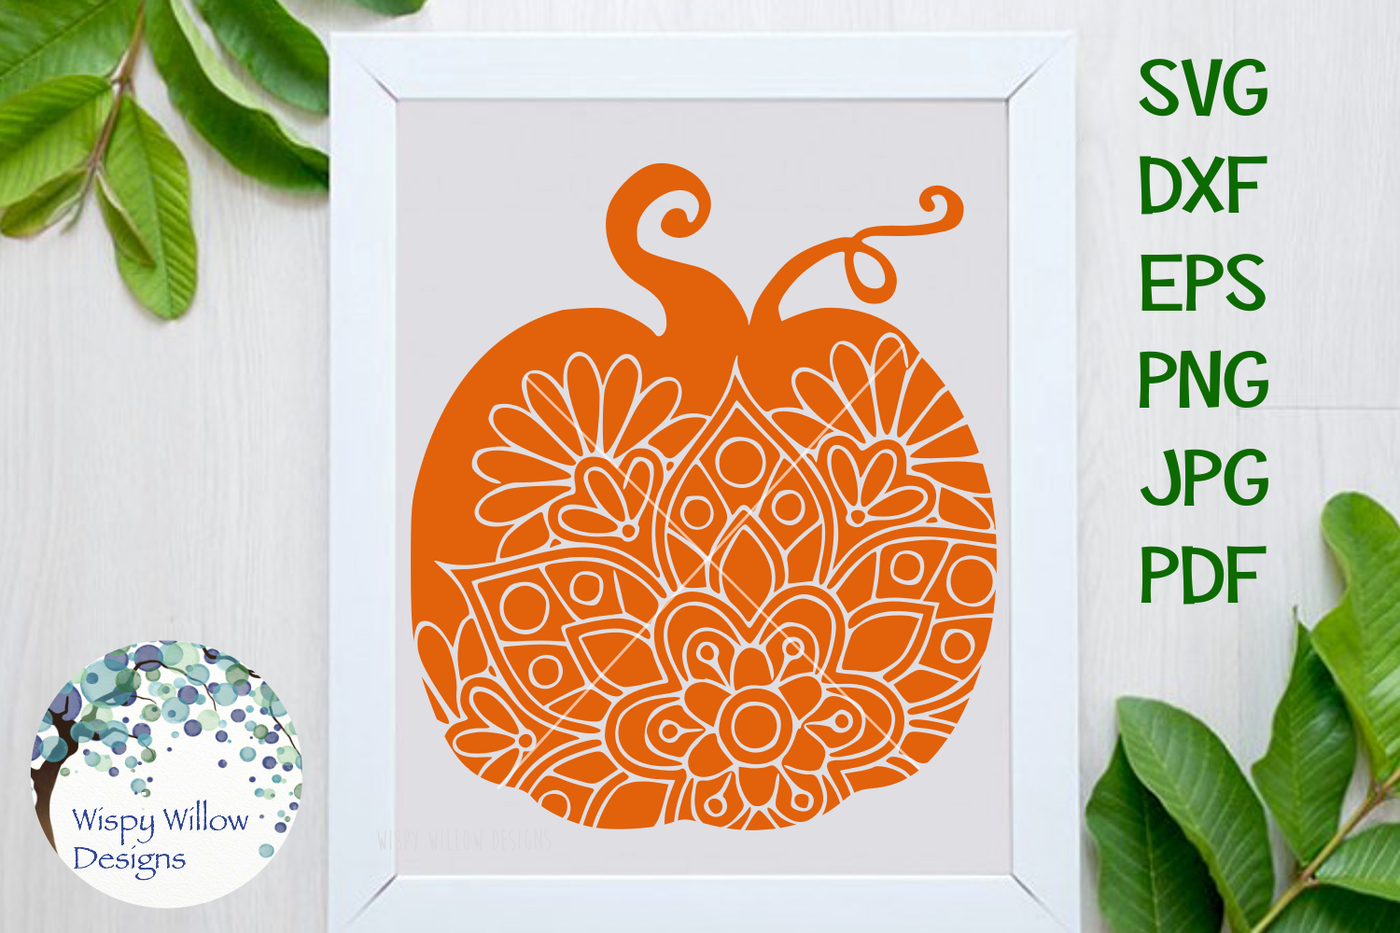 Download Pumpkin Mandala, Fall, Zentangle SVG/DXF/EPS/PNG/JPG/PDF By Wispy Willow Designs | TheHungryJPEG.com